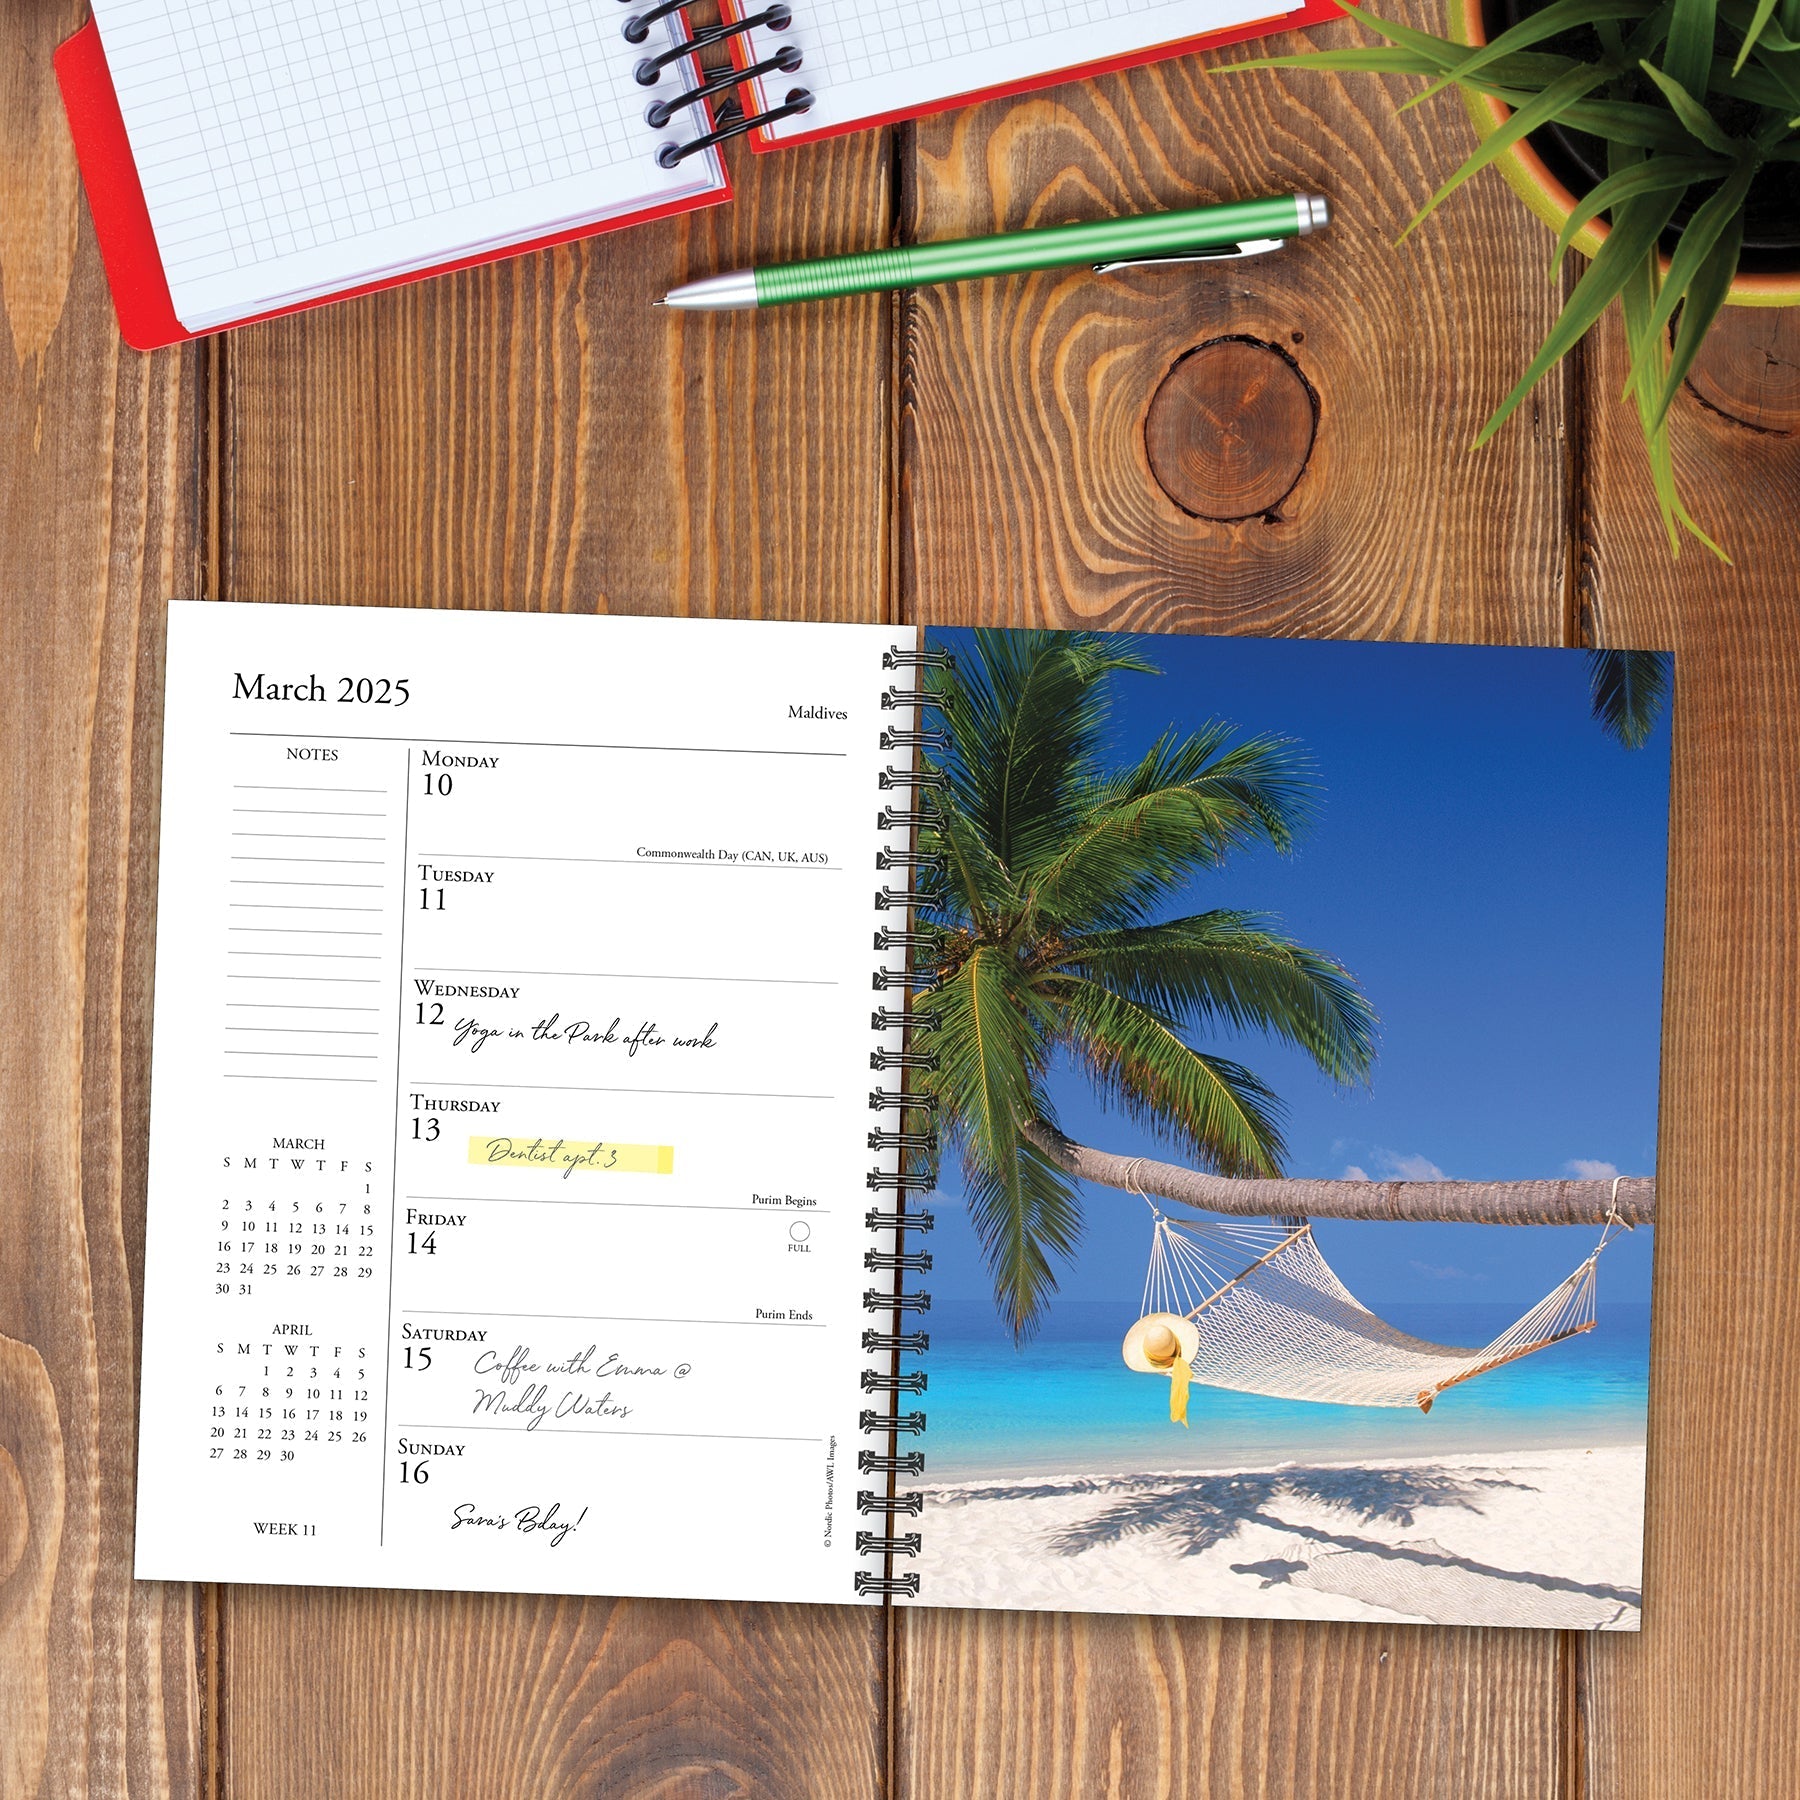 2025 Ah, The Beach! - Weekly Diary/Planner